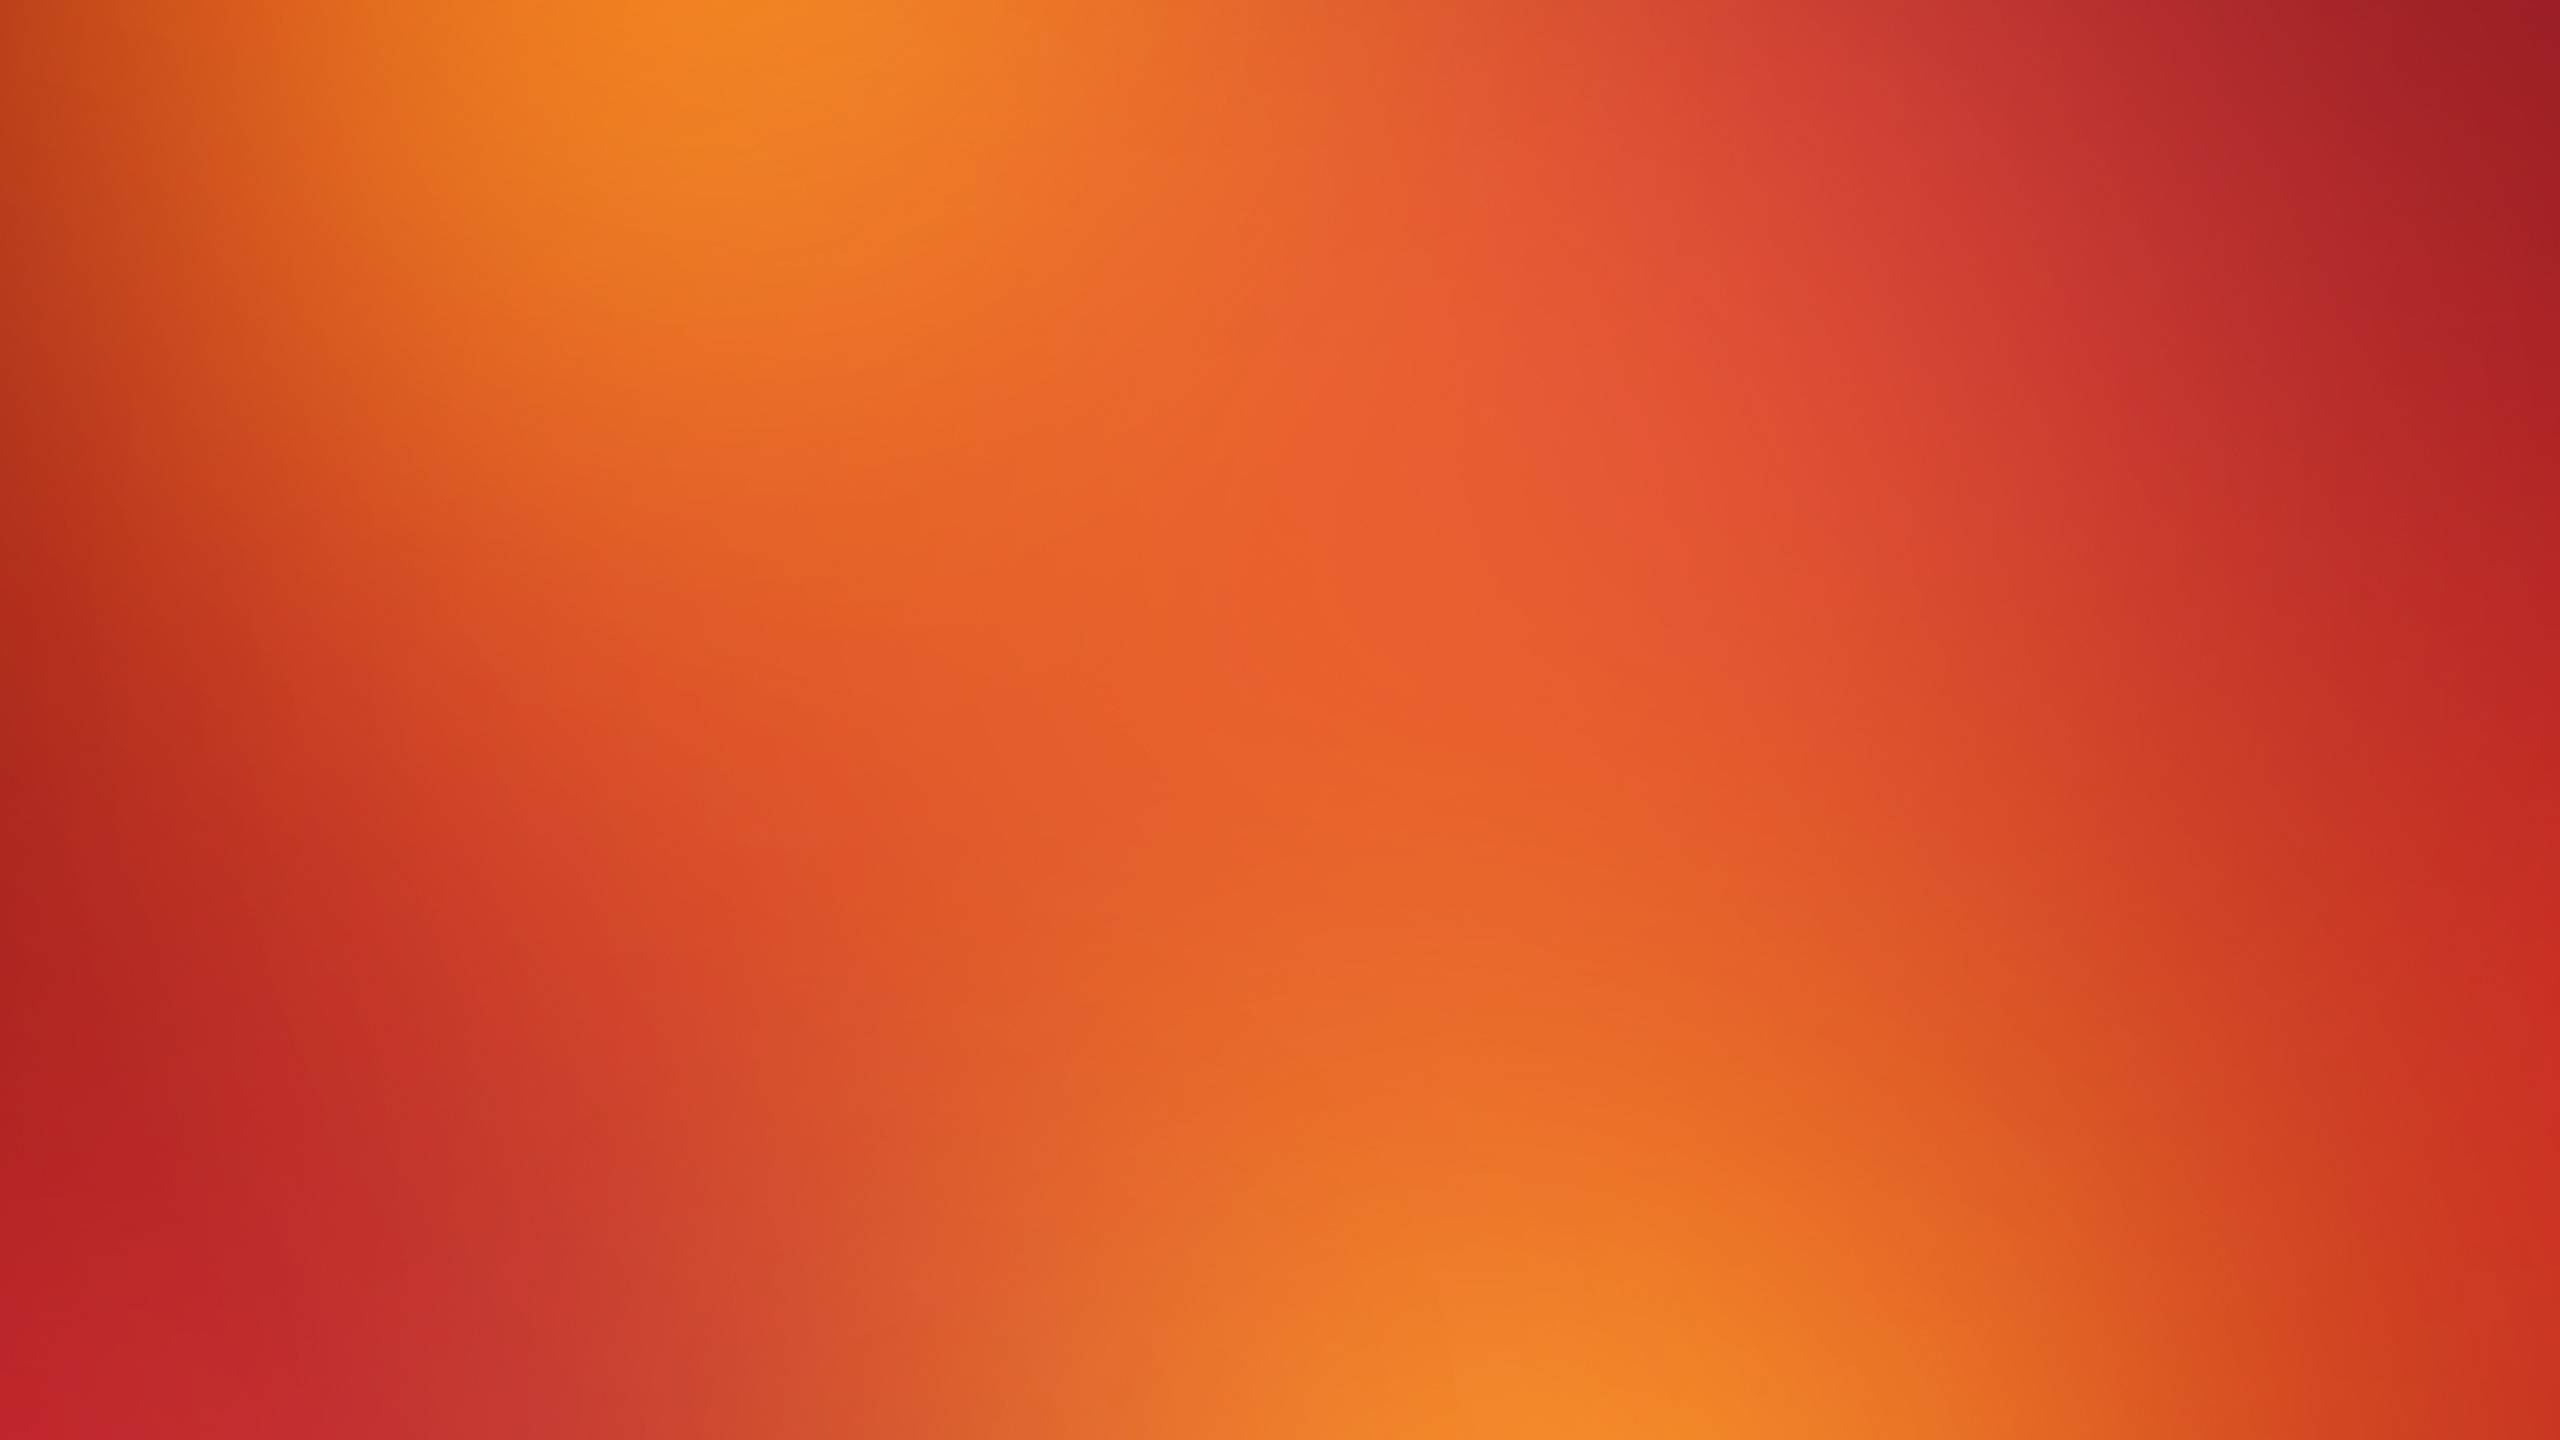 Images of Orange Red | 2560x1440